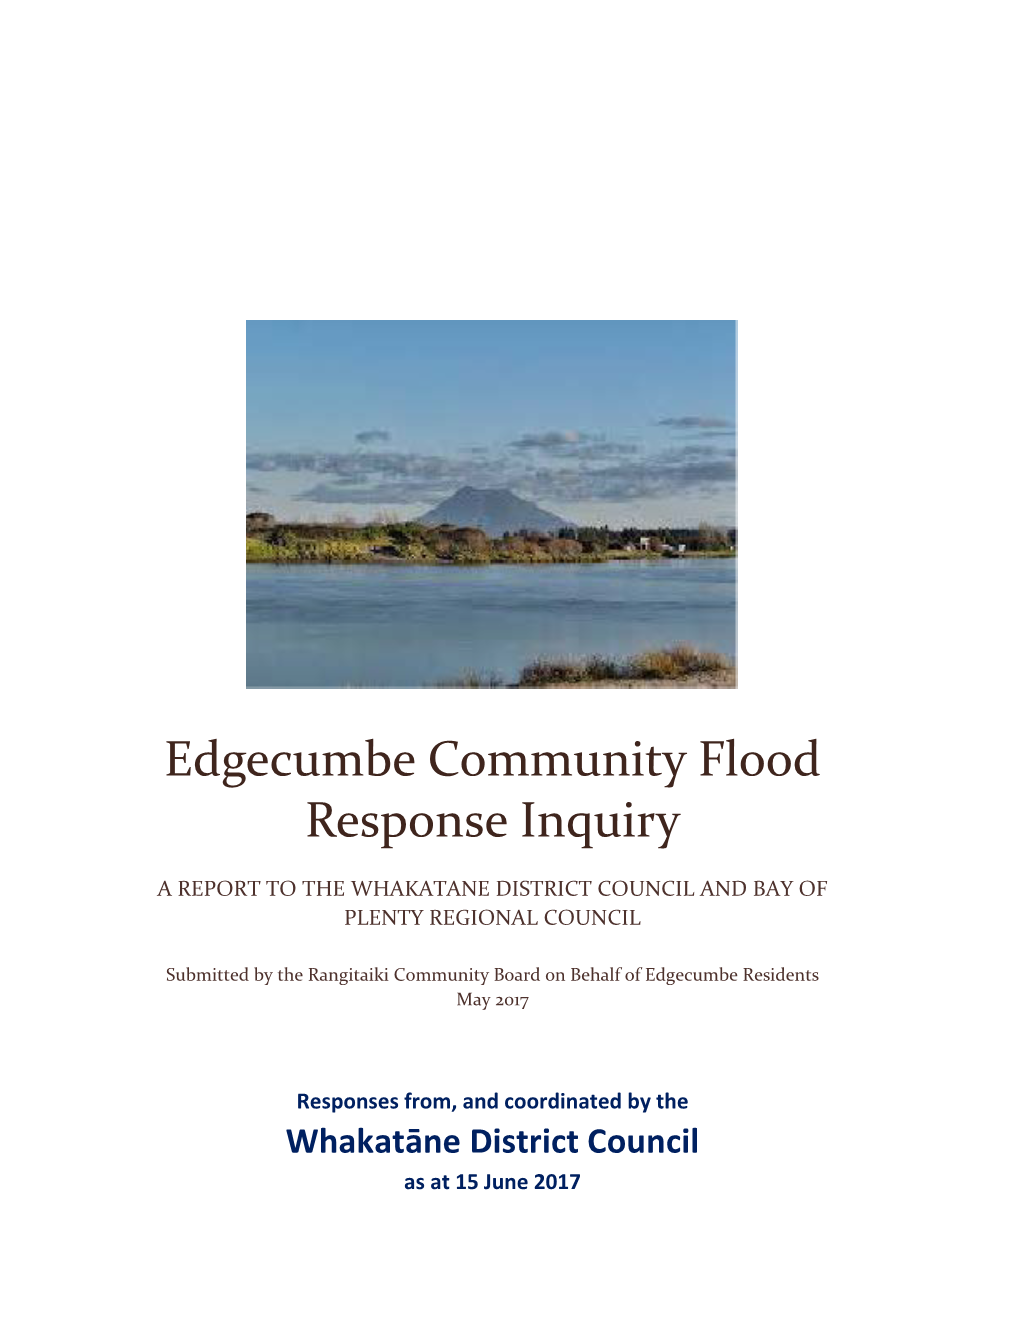 Edgecumbe Community Flood Response Inquiry